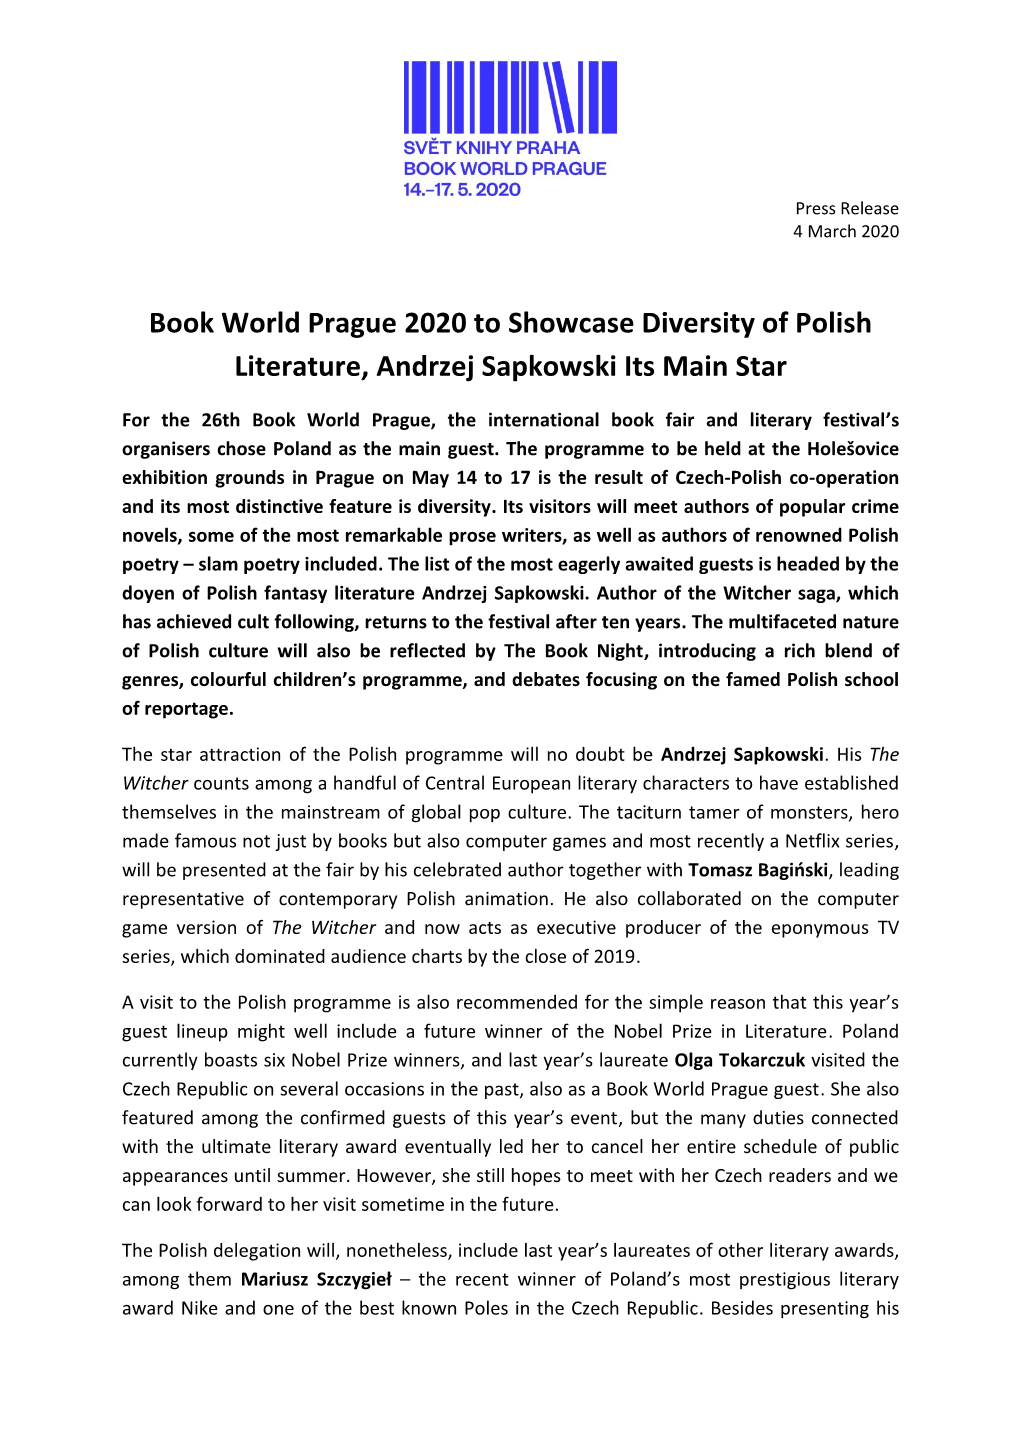 Book World Prague 2020 to Showcase Diversity of Polish Literature, Andrzej Sapkowski Its Main Star